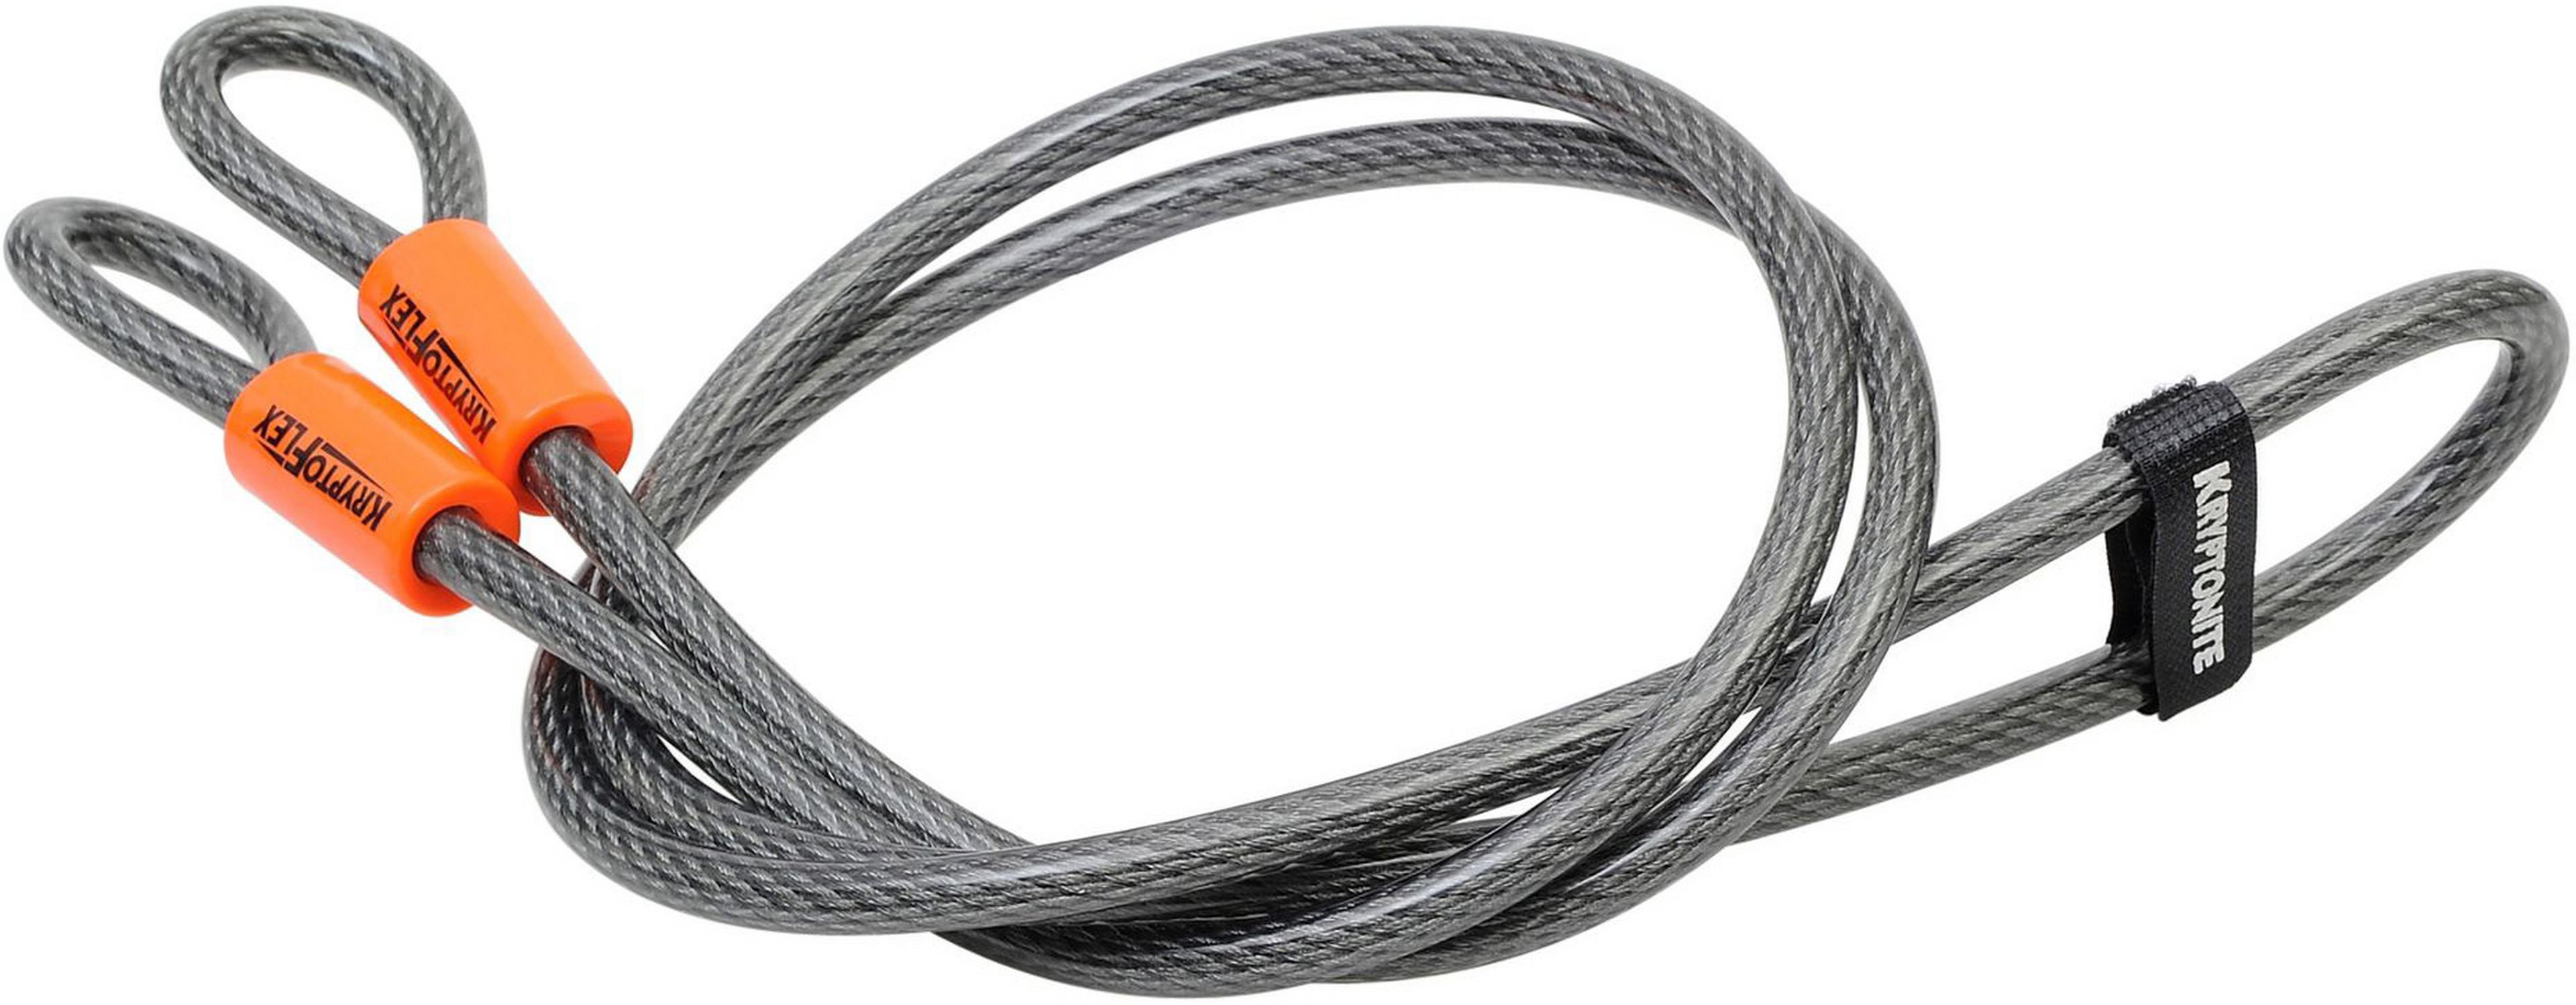 Kryptonite Kryptoflex Cables, 7' x 10mm